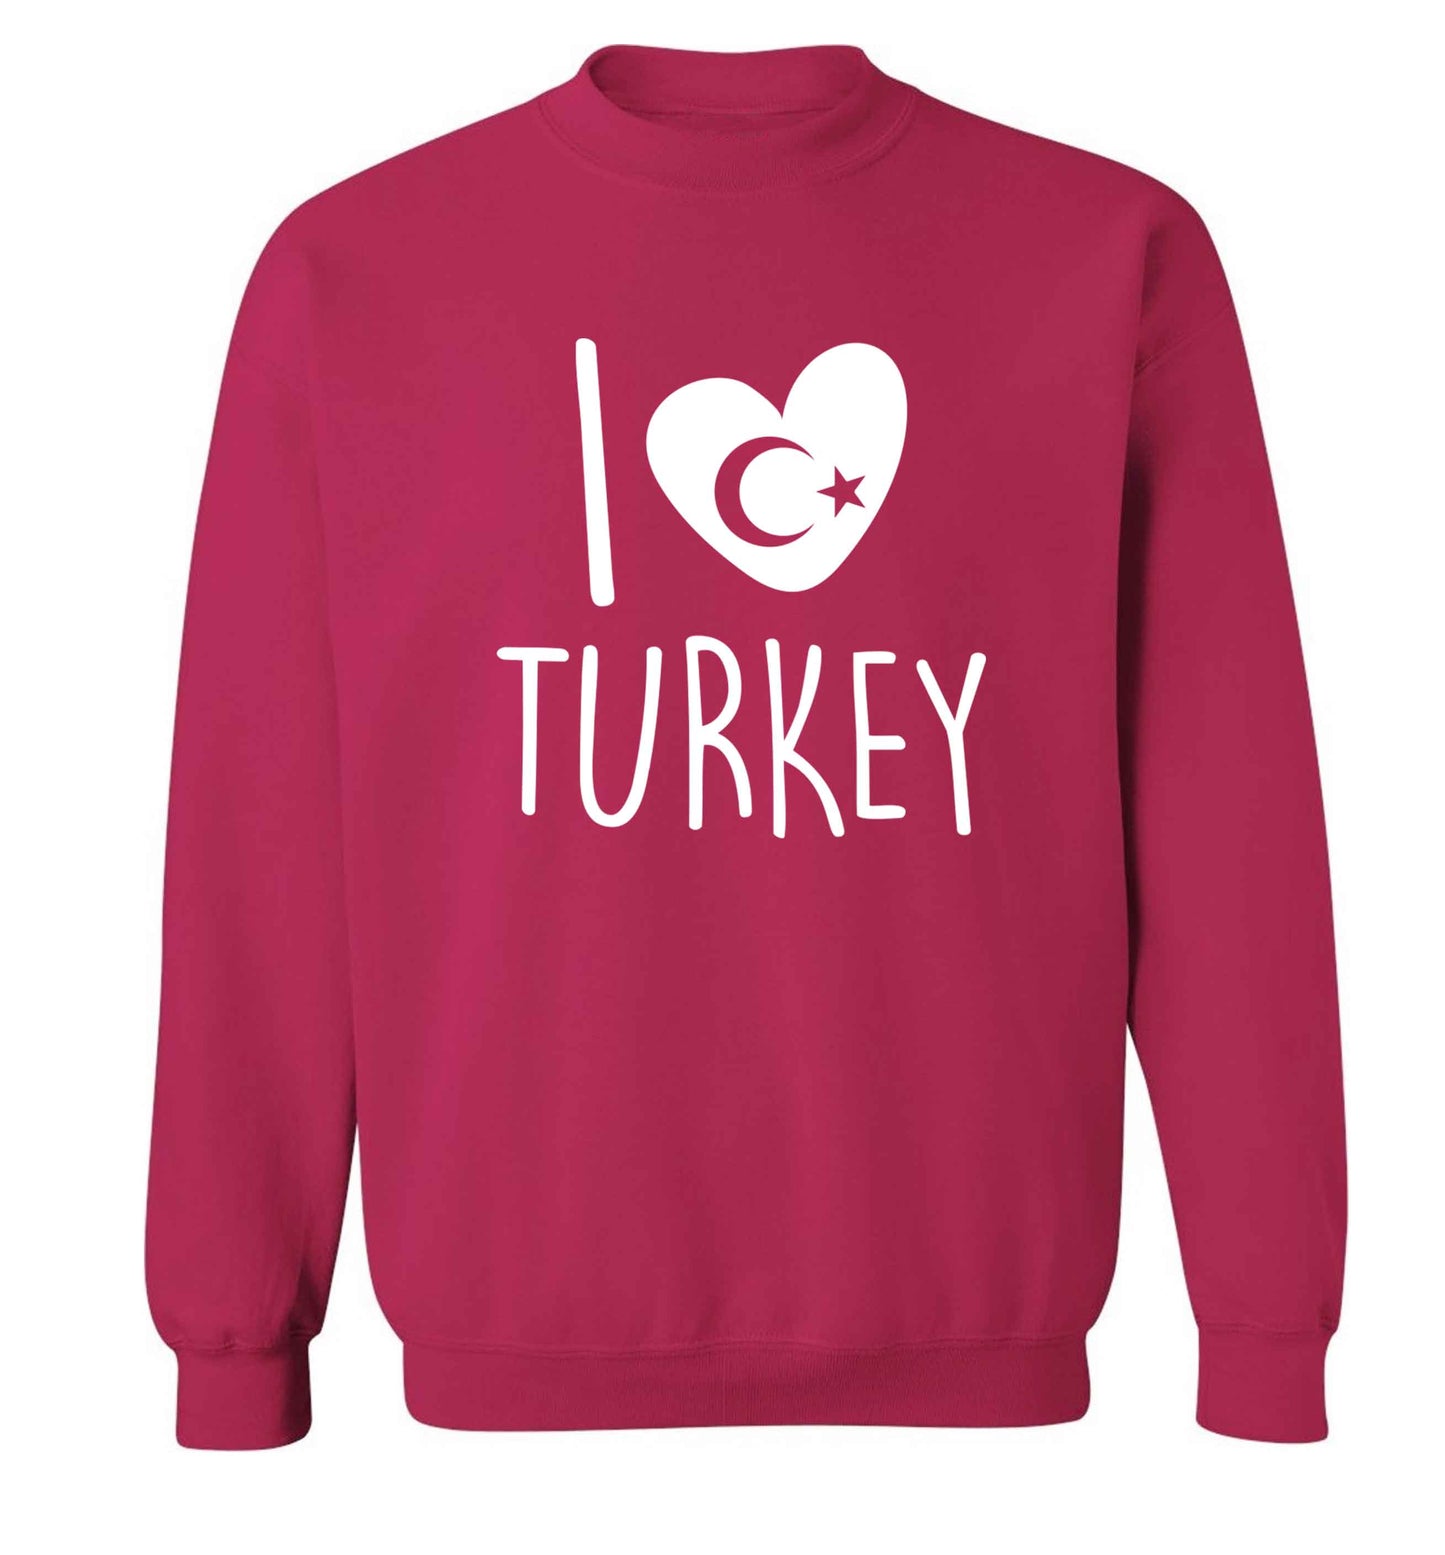 I love Turkey Adult's unisex pink Sweater 2XL